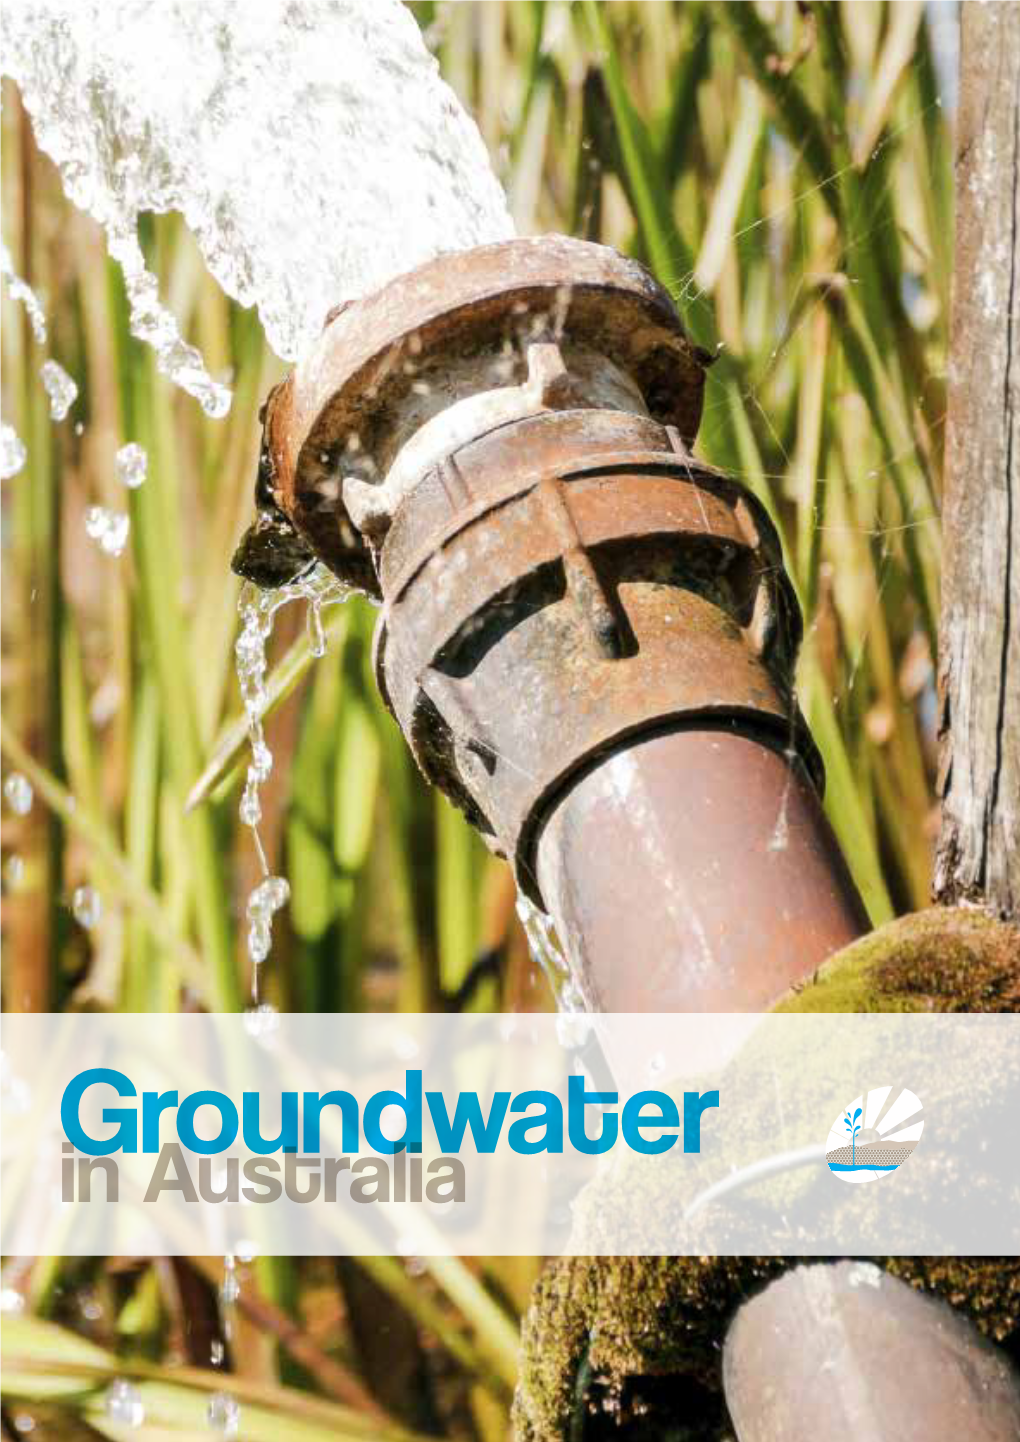 REPORT: Groundwater in Australia